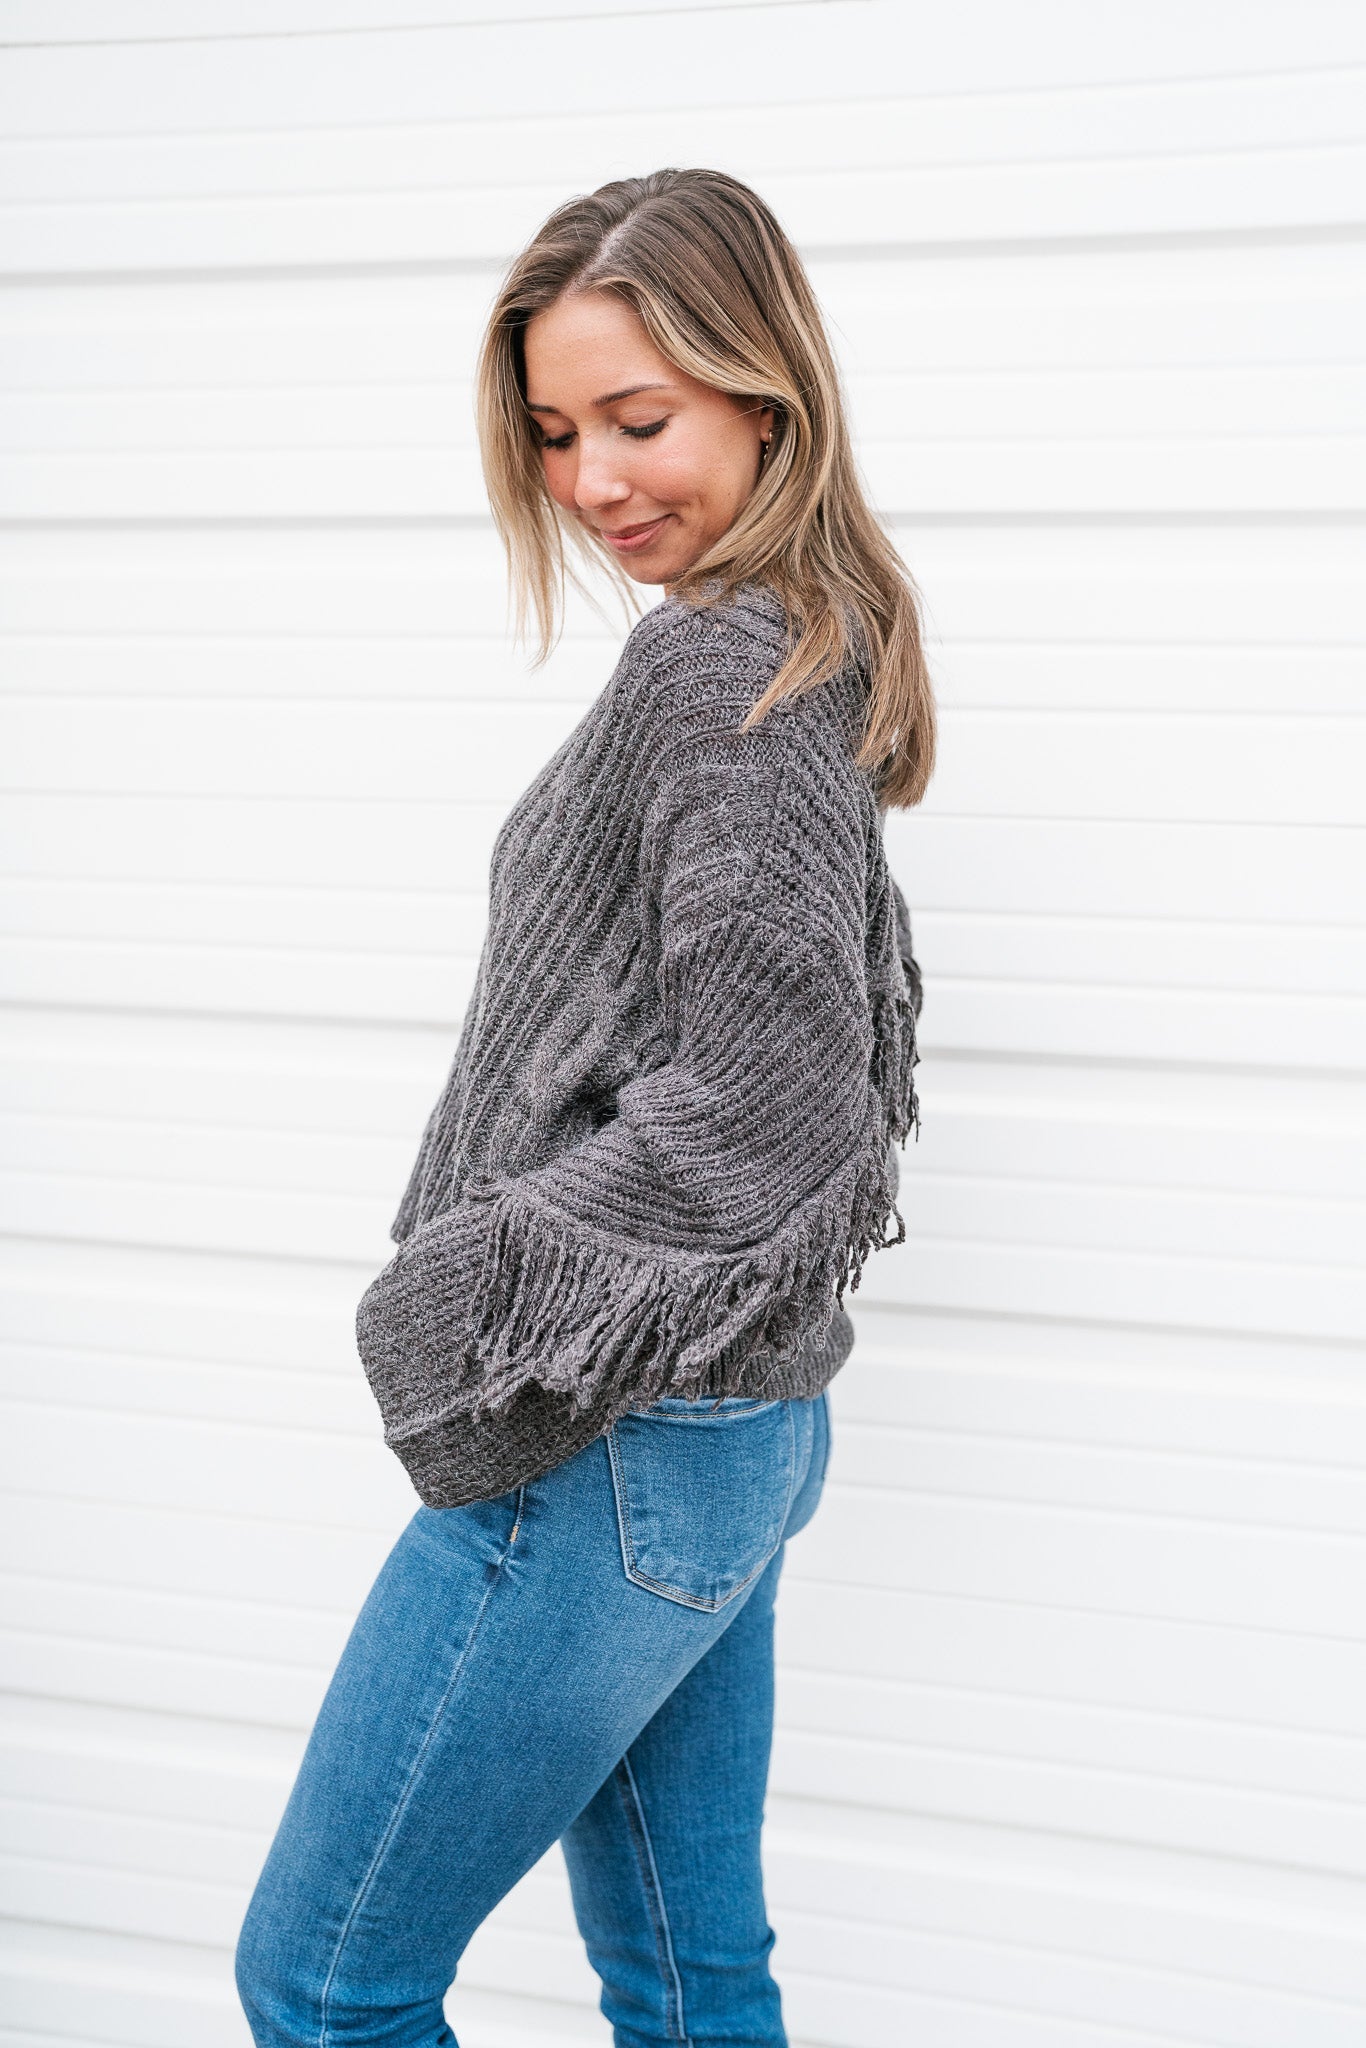 Estelle Fringe Cable Knit Sweater